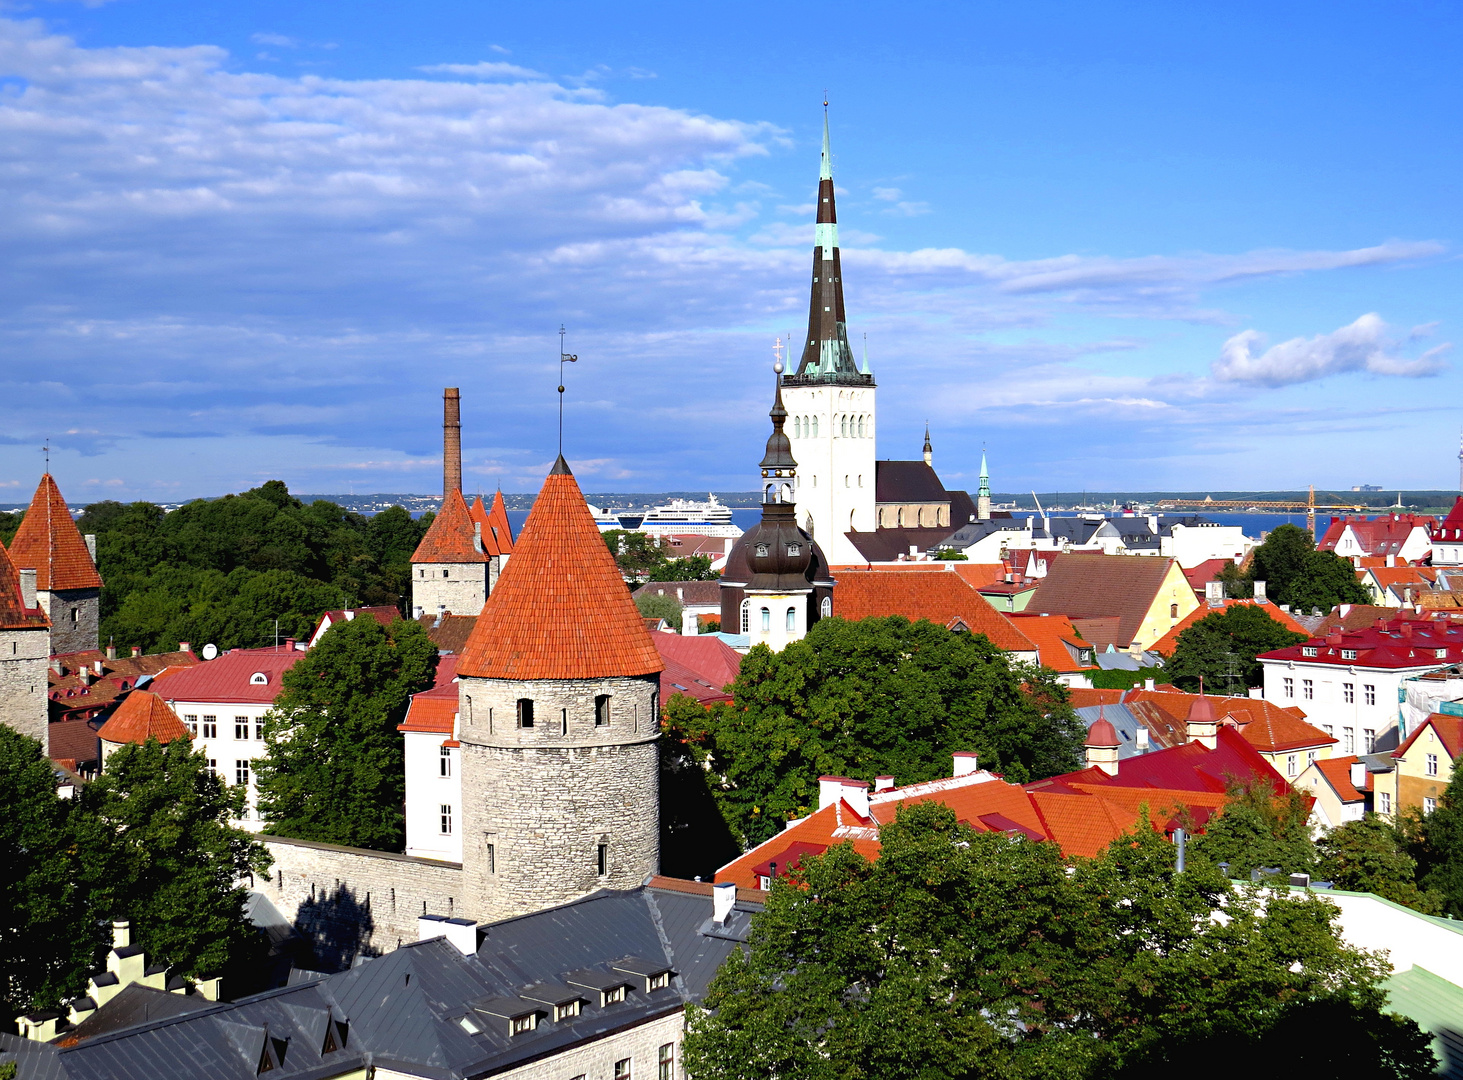 Tallinn (Estonia) View from Toompea